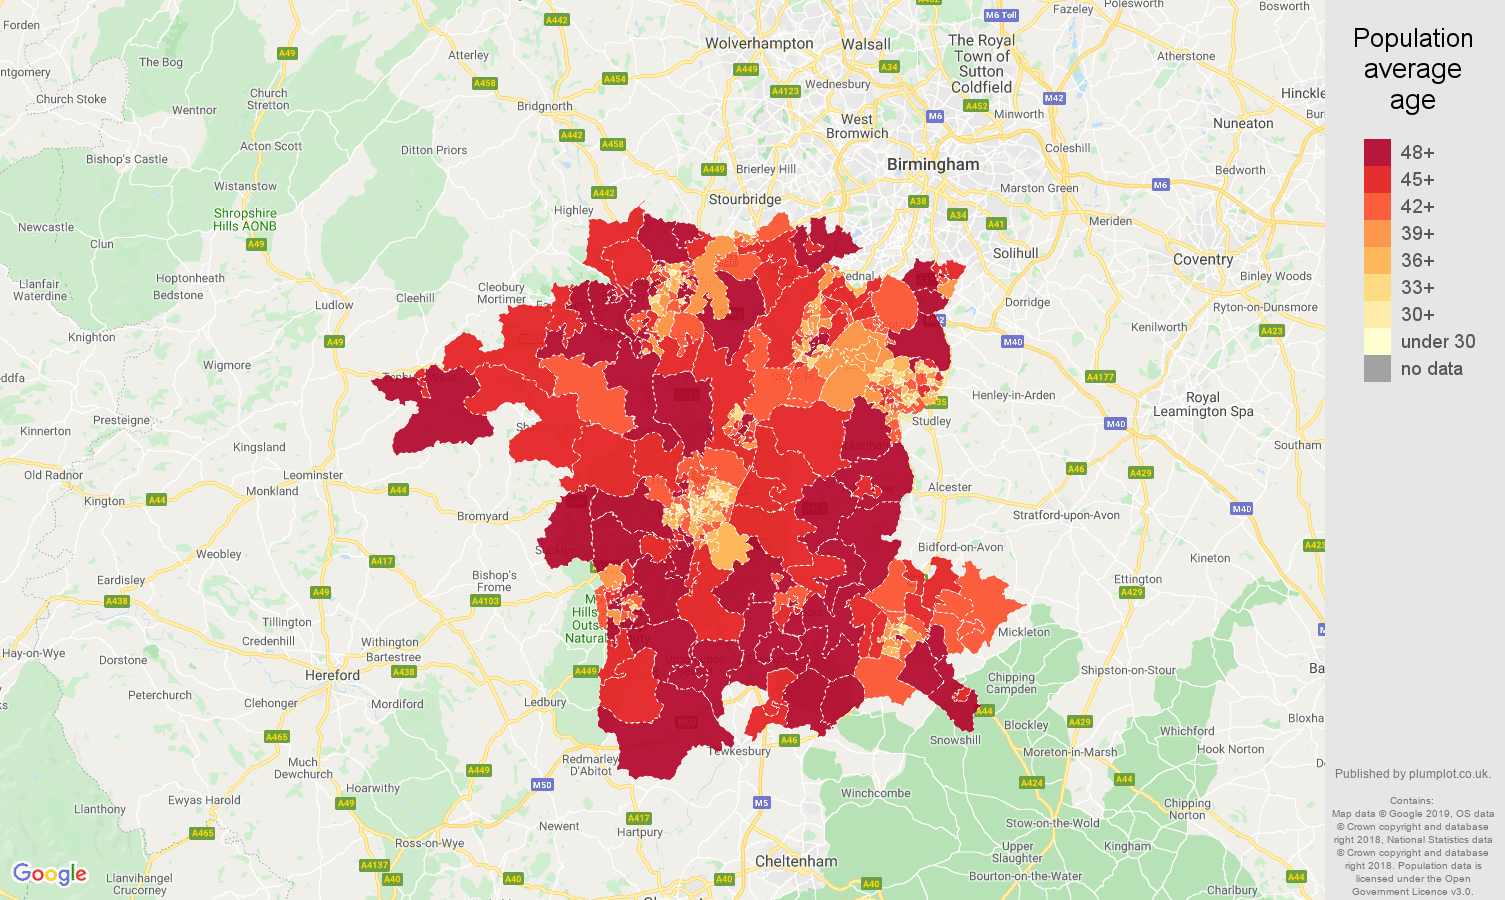 Worcestershire population average age map